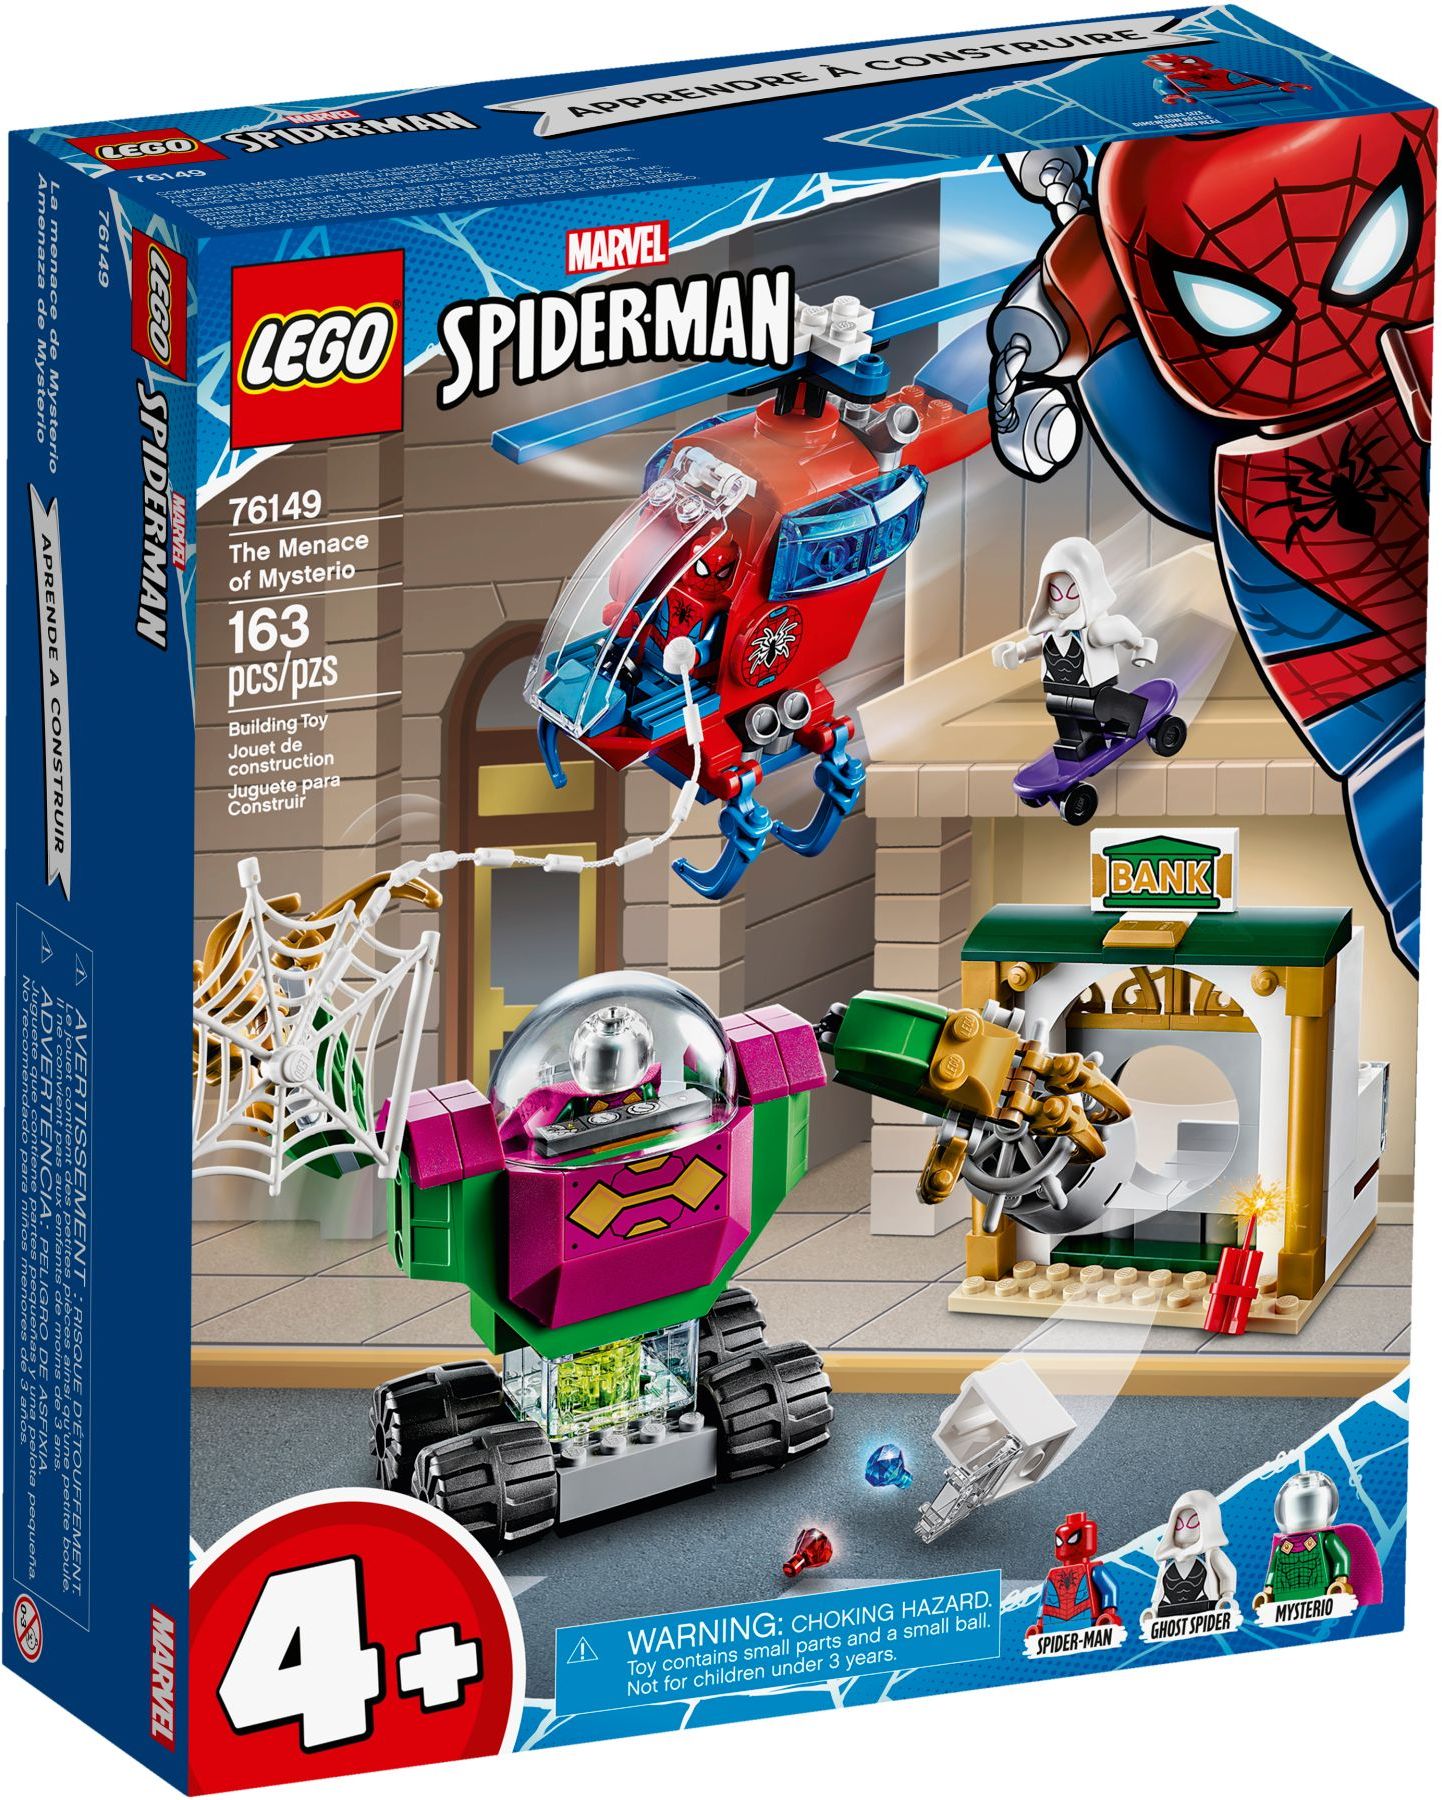 Lego MiniFigure Marvel Superheroes Thor with Hammer NEW Set 30165 Birthday 